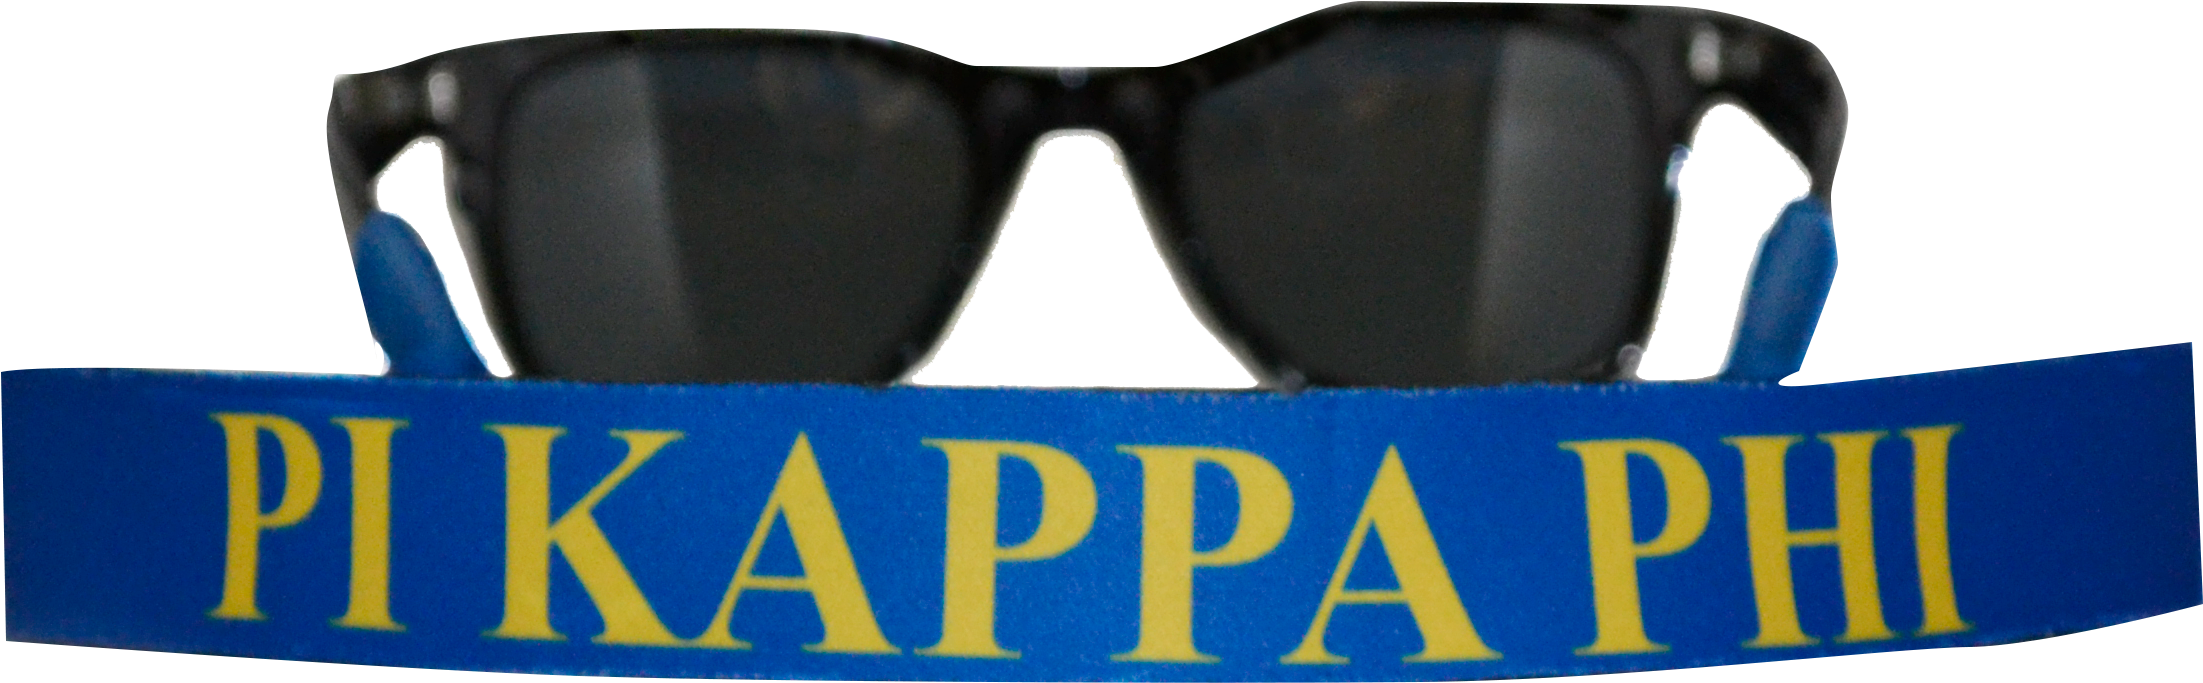 Pi Kappa Phi Sunglasses PNG